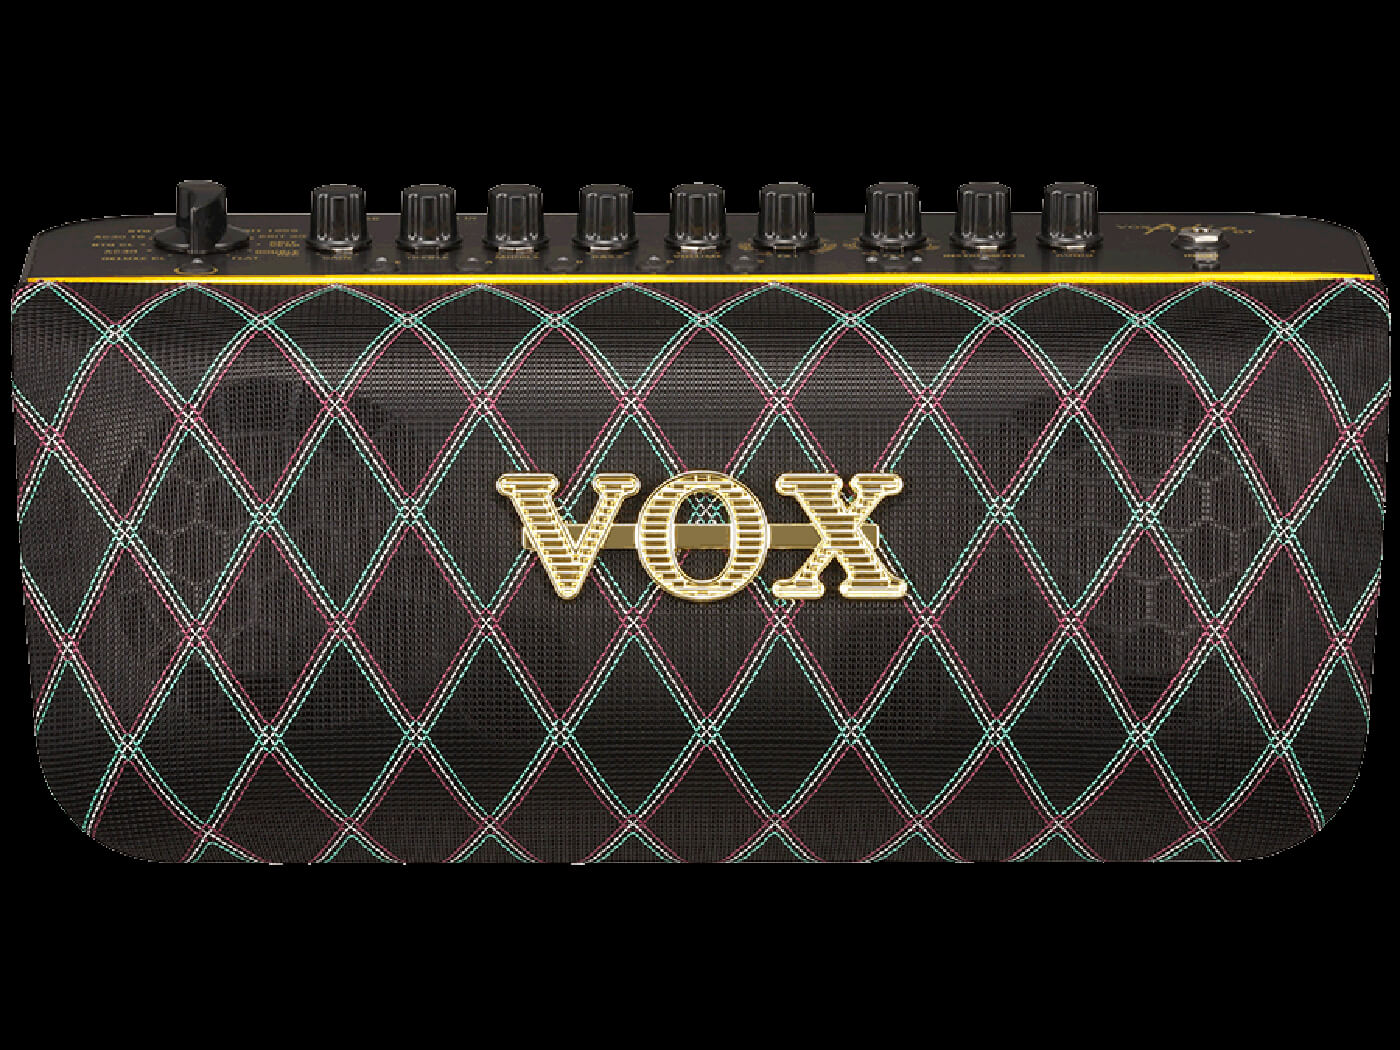 Vox ADIO空气燃气轮机